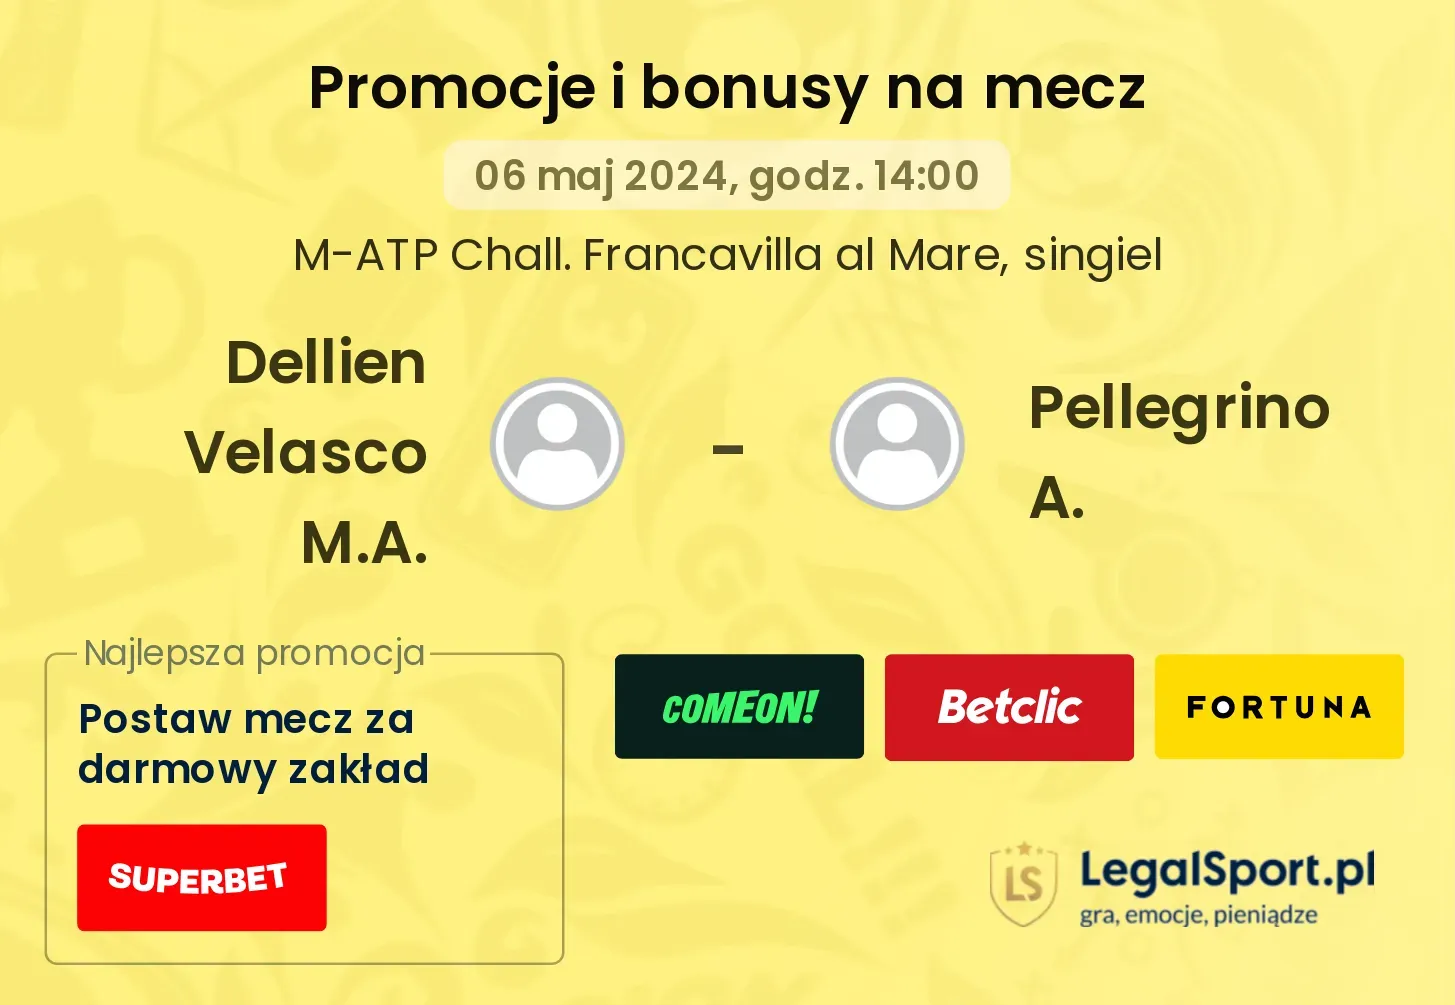 Dellien Velasco M.A. - Pellegrino A. promocje bonusy na mecz